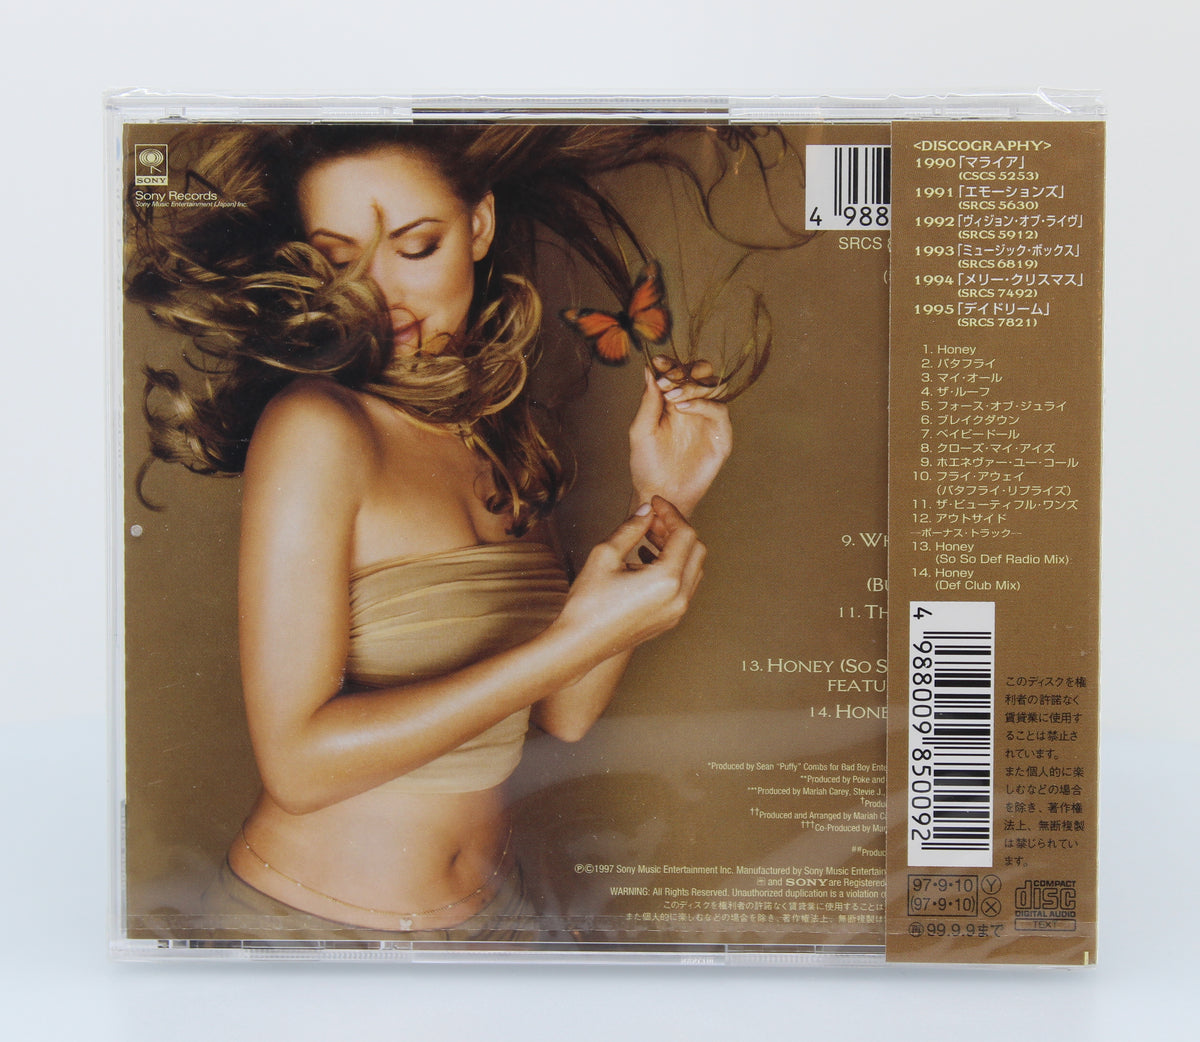 Mariah Carey – Butterfly, CD Album, Japan 1997(CD 605)